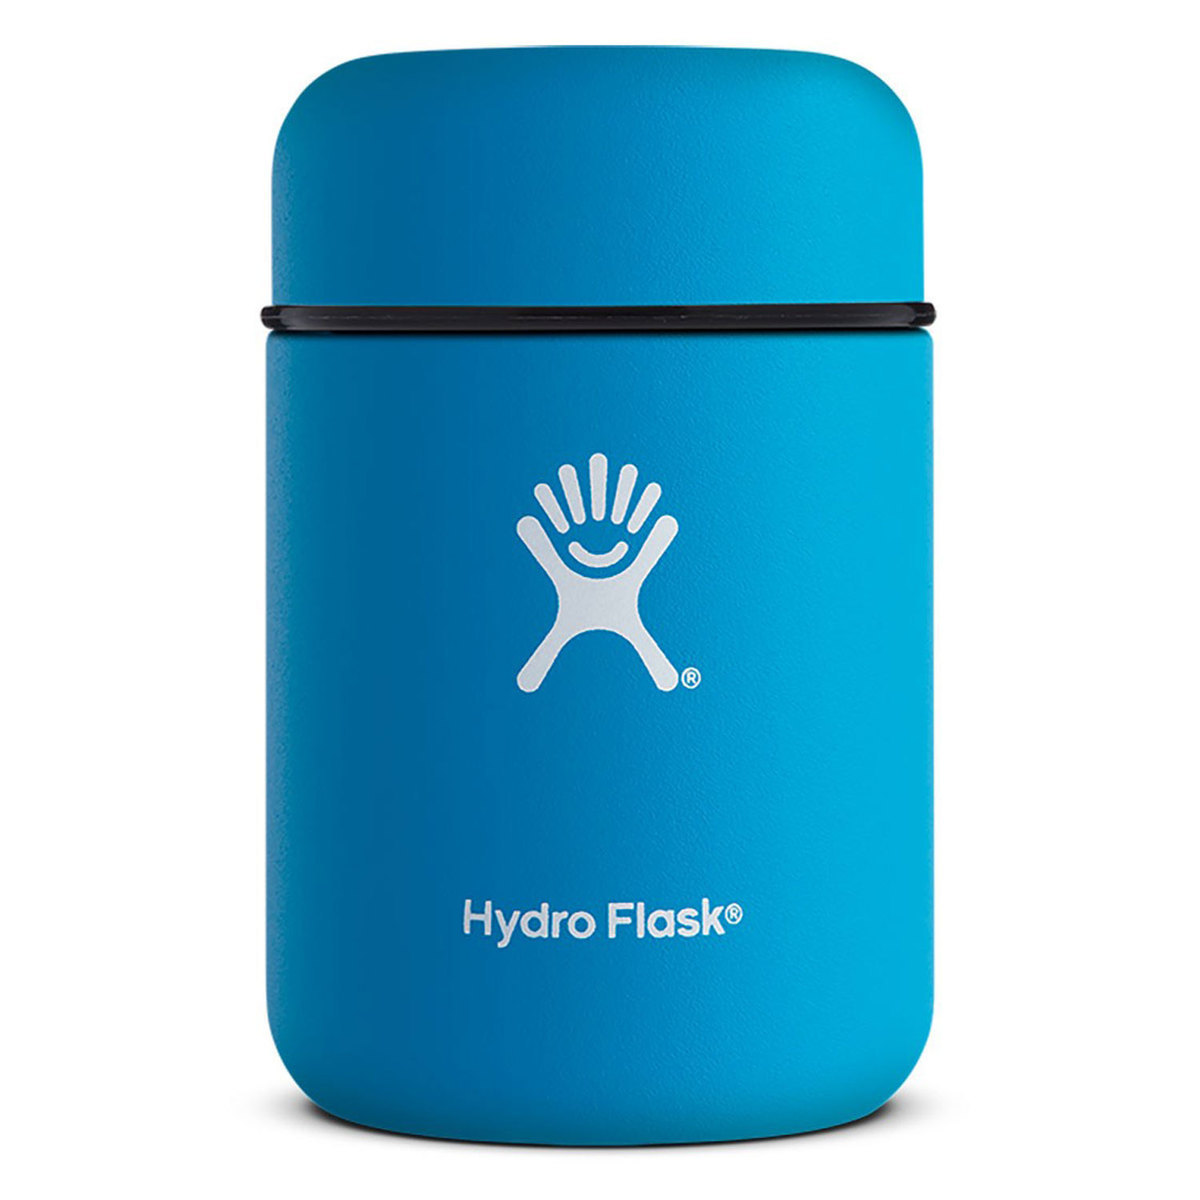 Hydro Flask Food Flask, Pacific, 12 oz